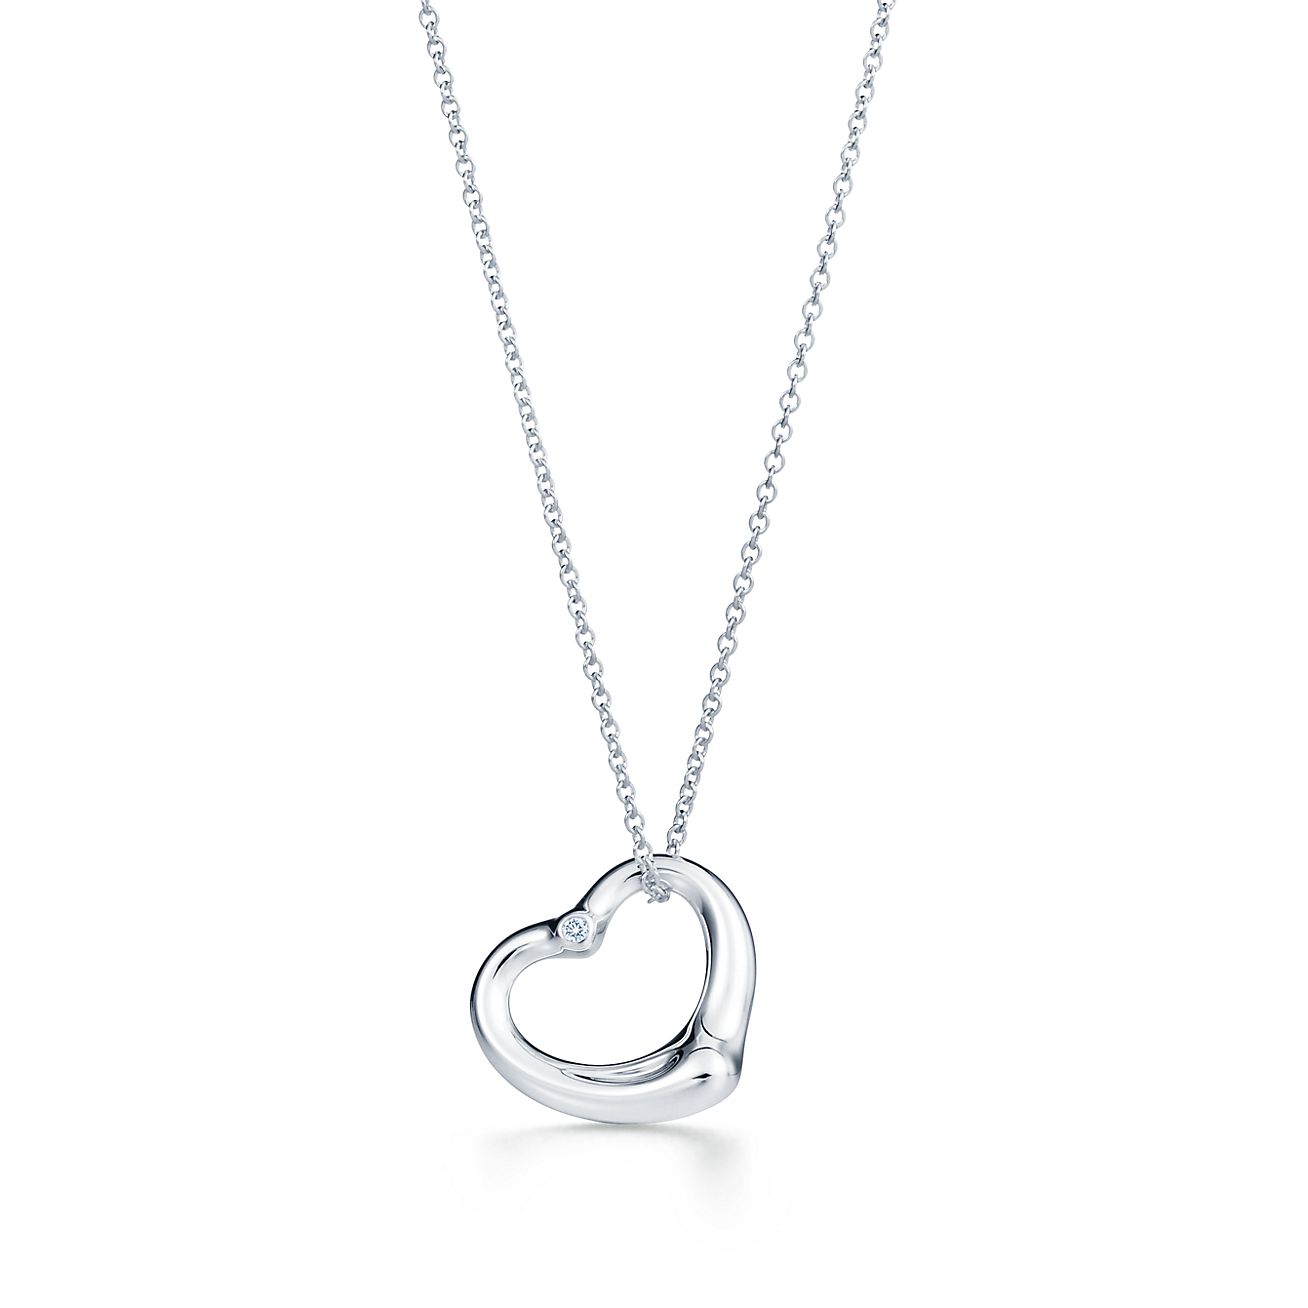 TIFFANY & CO PERETTI Sterling Silver 35.3 MM Black Jade Open Heart Mesh  Necklace | eBay